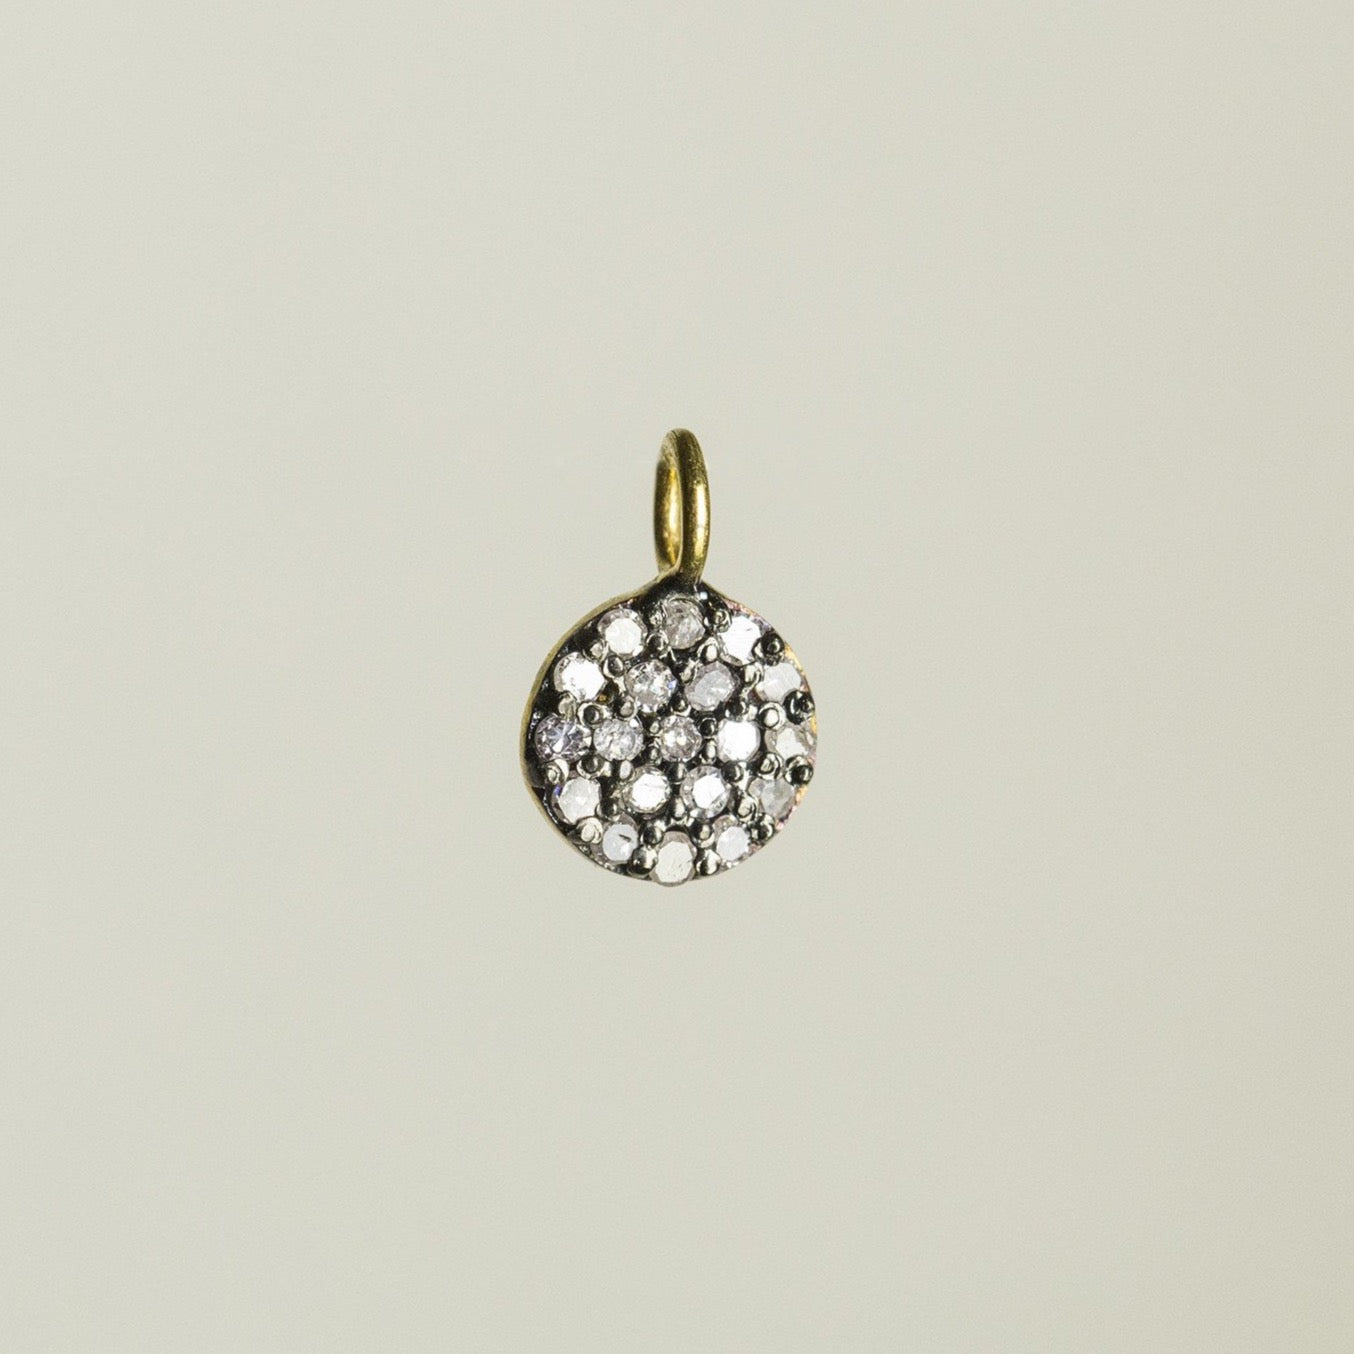 super sparkly diamonds set in oxidised silver - the beautiful small disc pendant